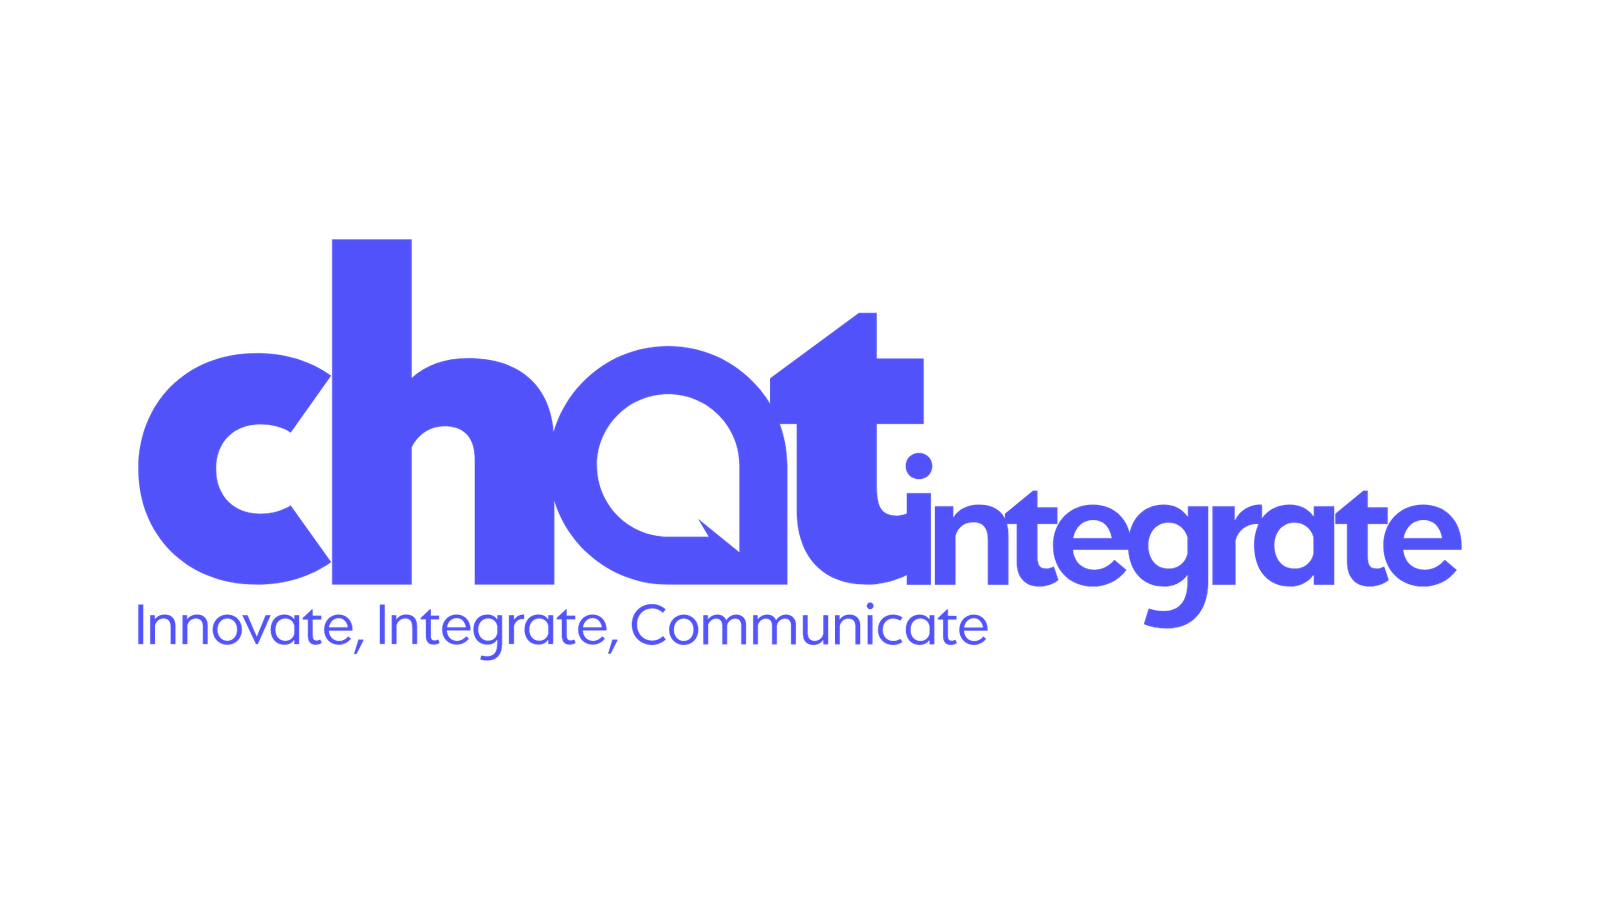 Chat Intergate's logo